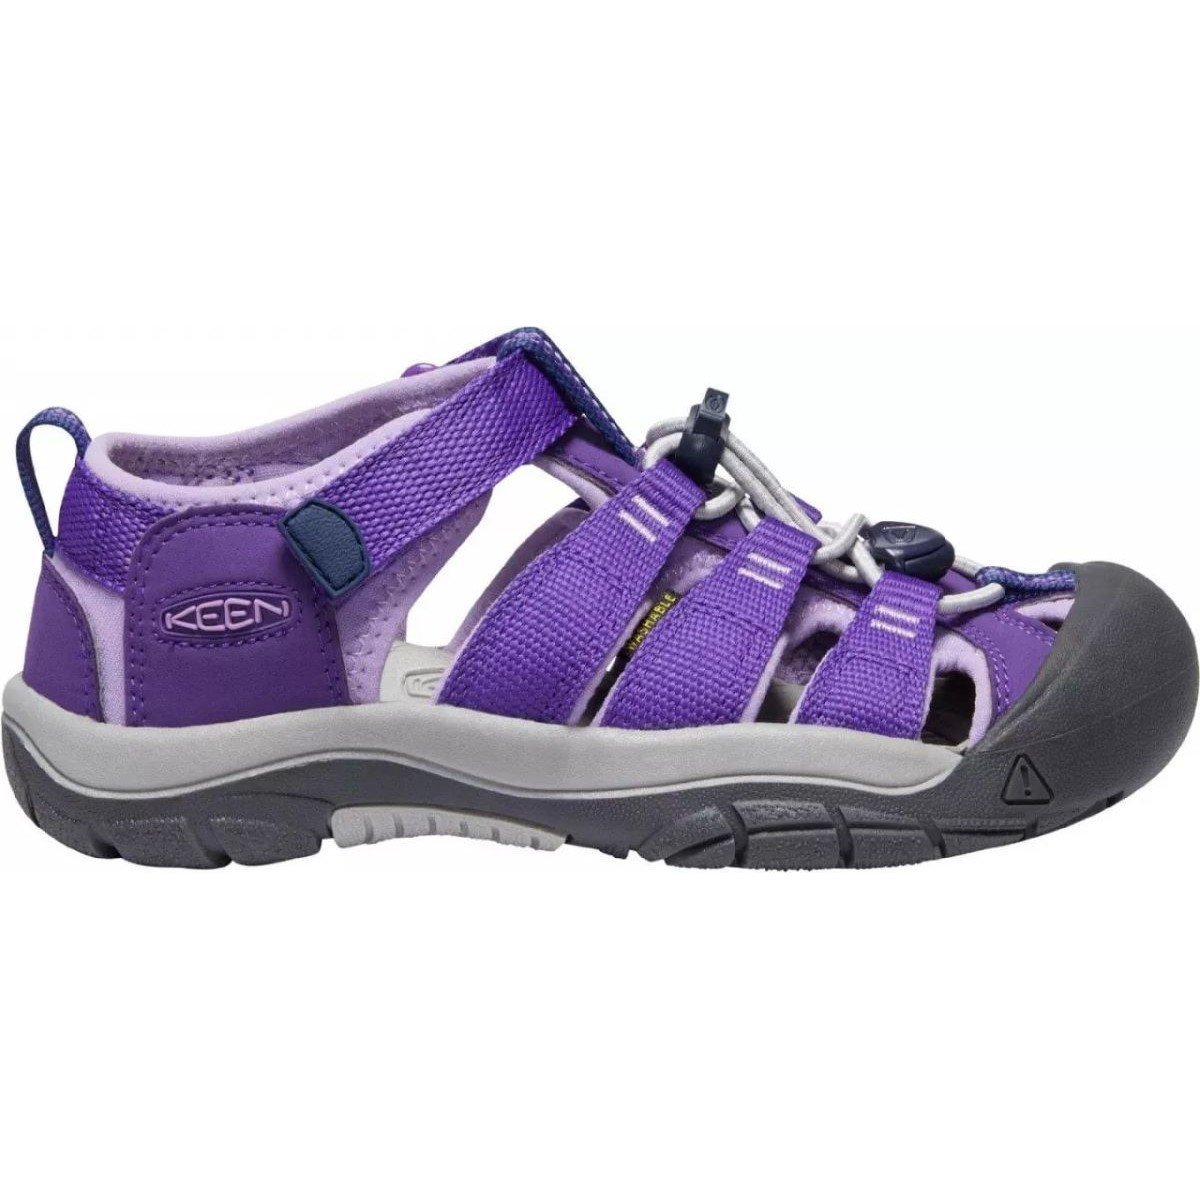 Взуття дитяче Keen Newport H2 J - фіолетове